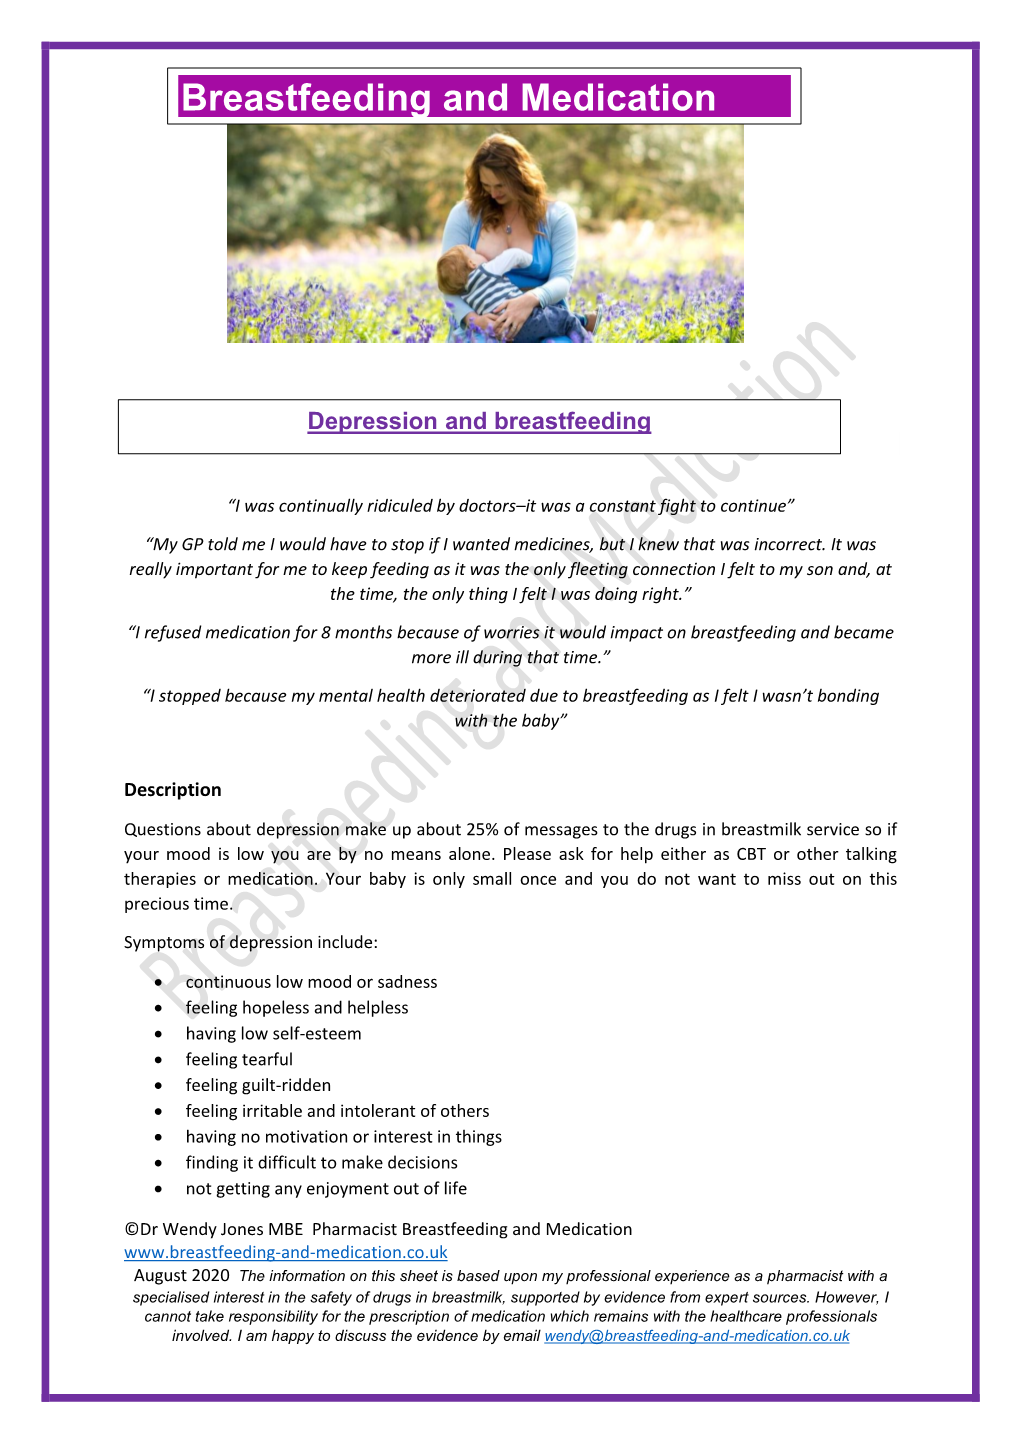 More Information: Depression and Breastfeeding Factsheet